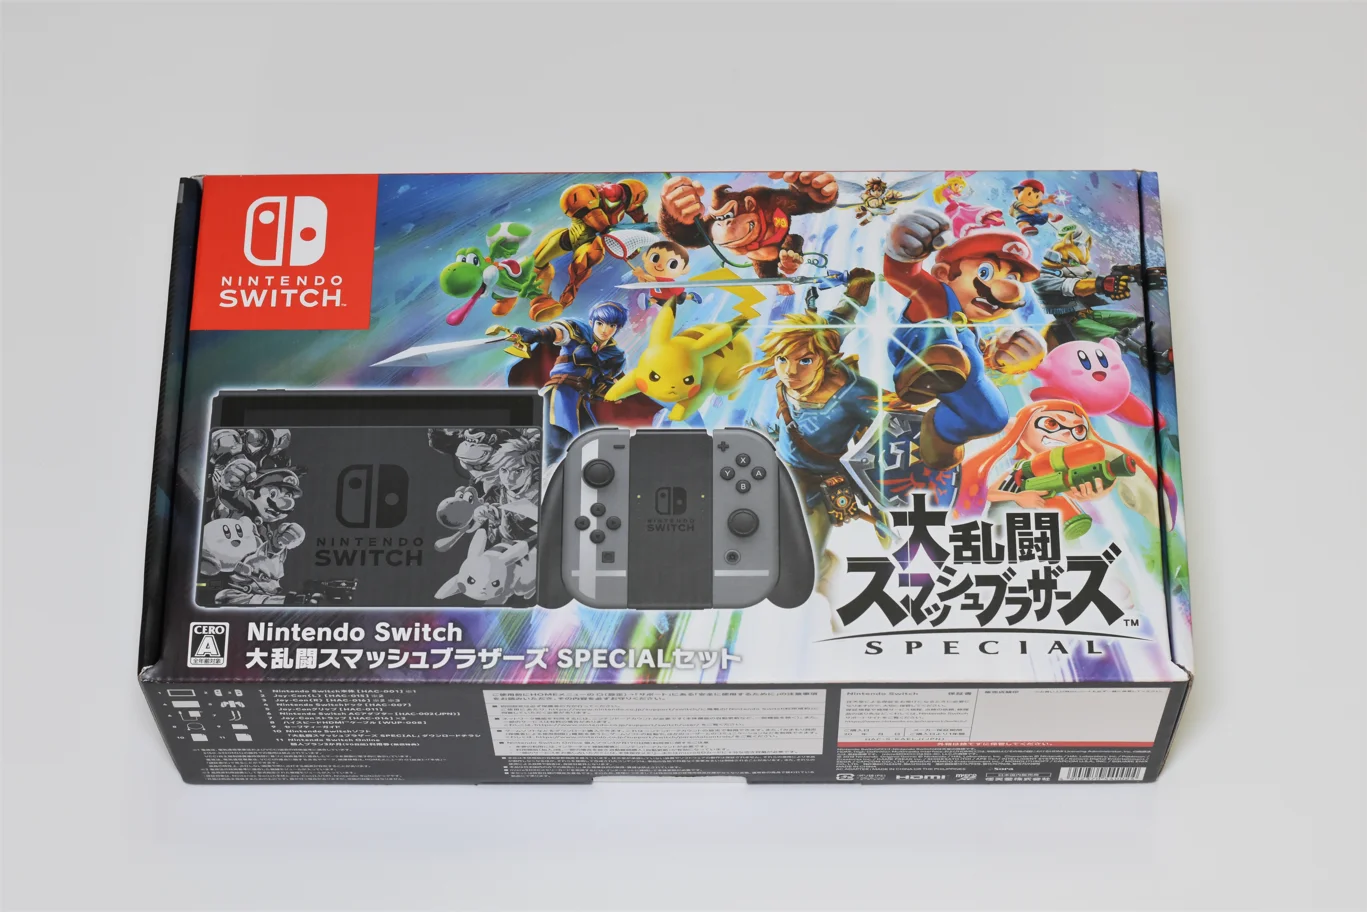  Nintendo Switch Super Smash Bros Ultimate Console [JP]